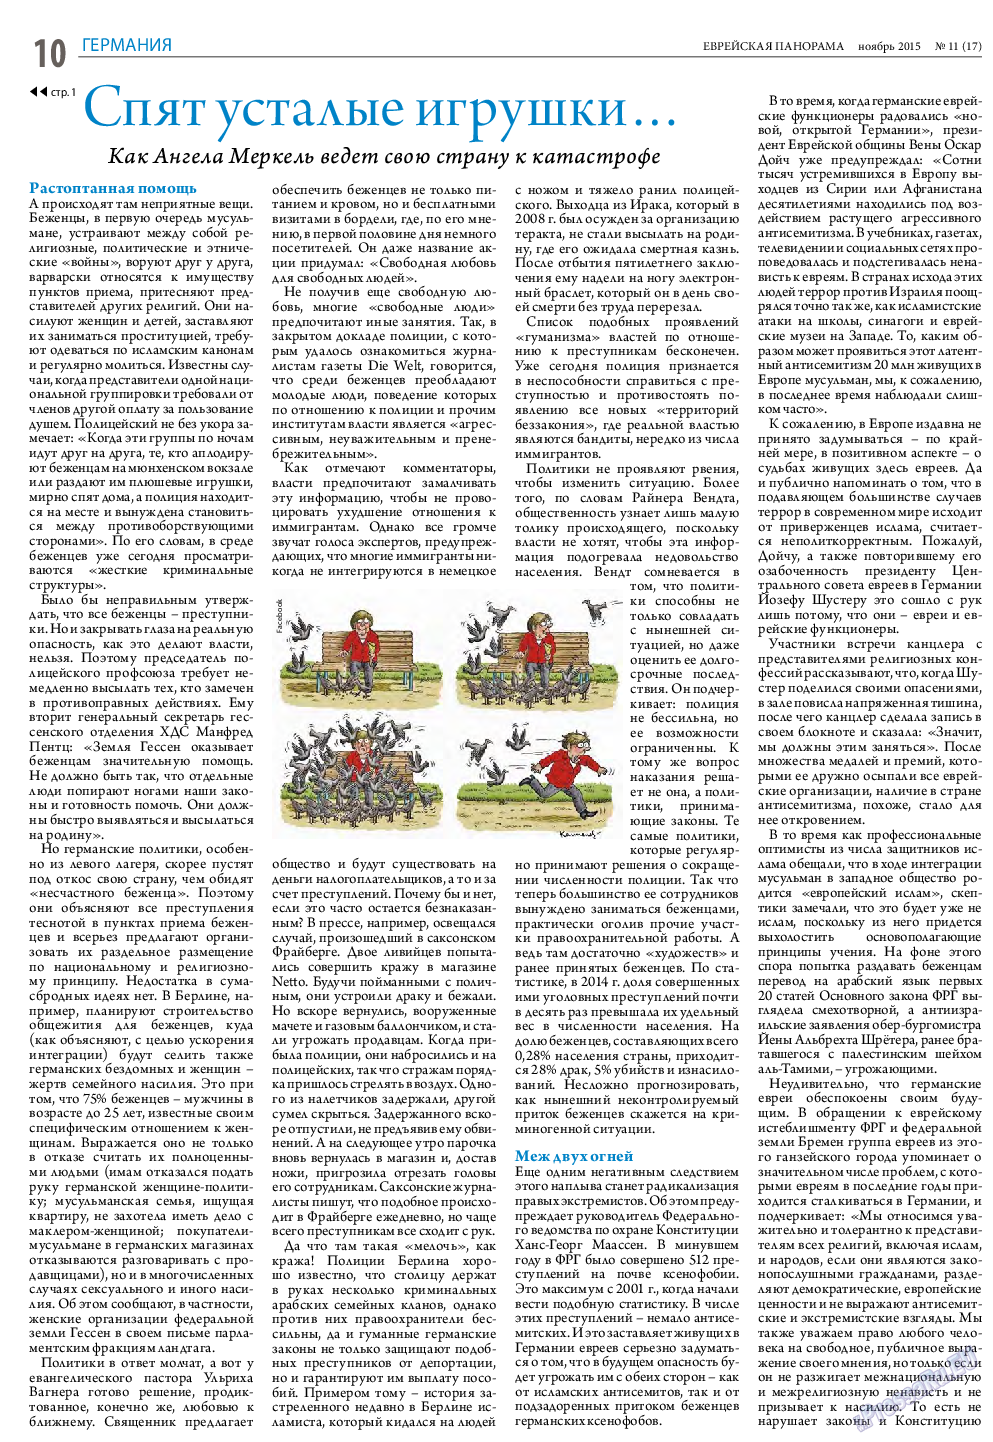 Еврейская панорама, газета. 2015 №11 стр.10